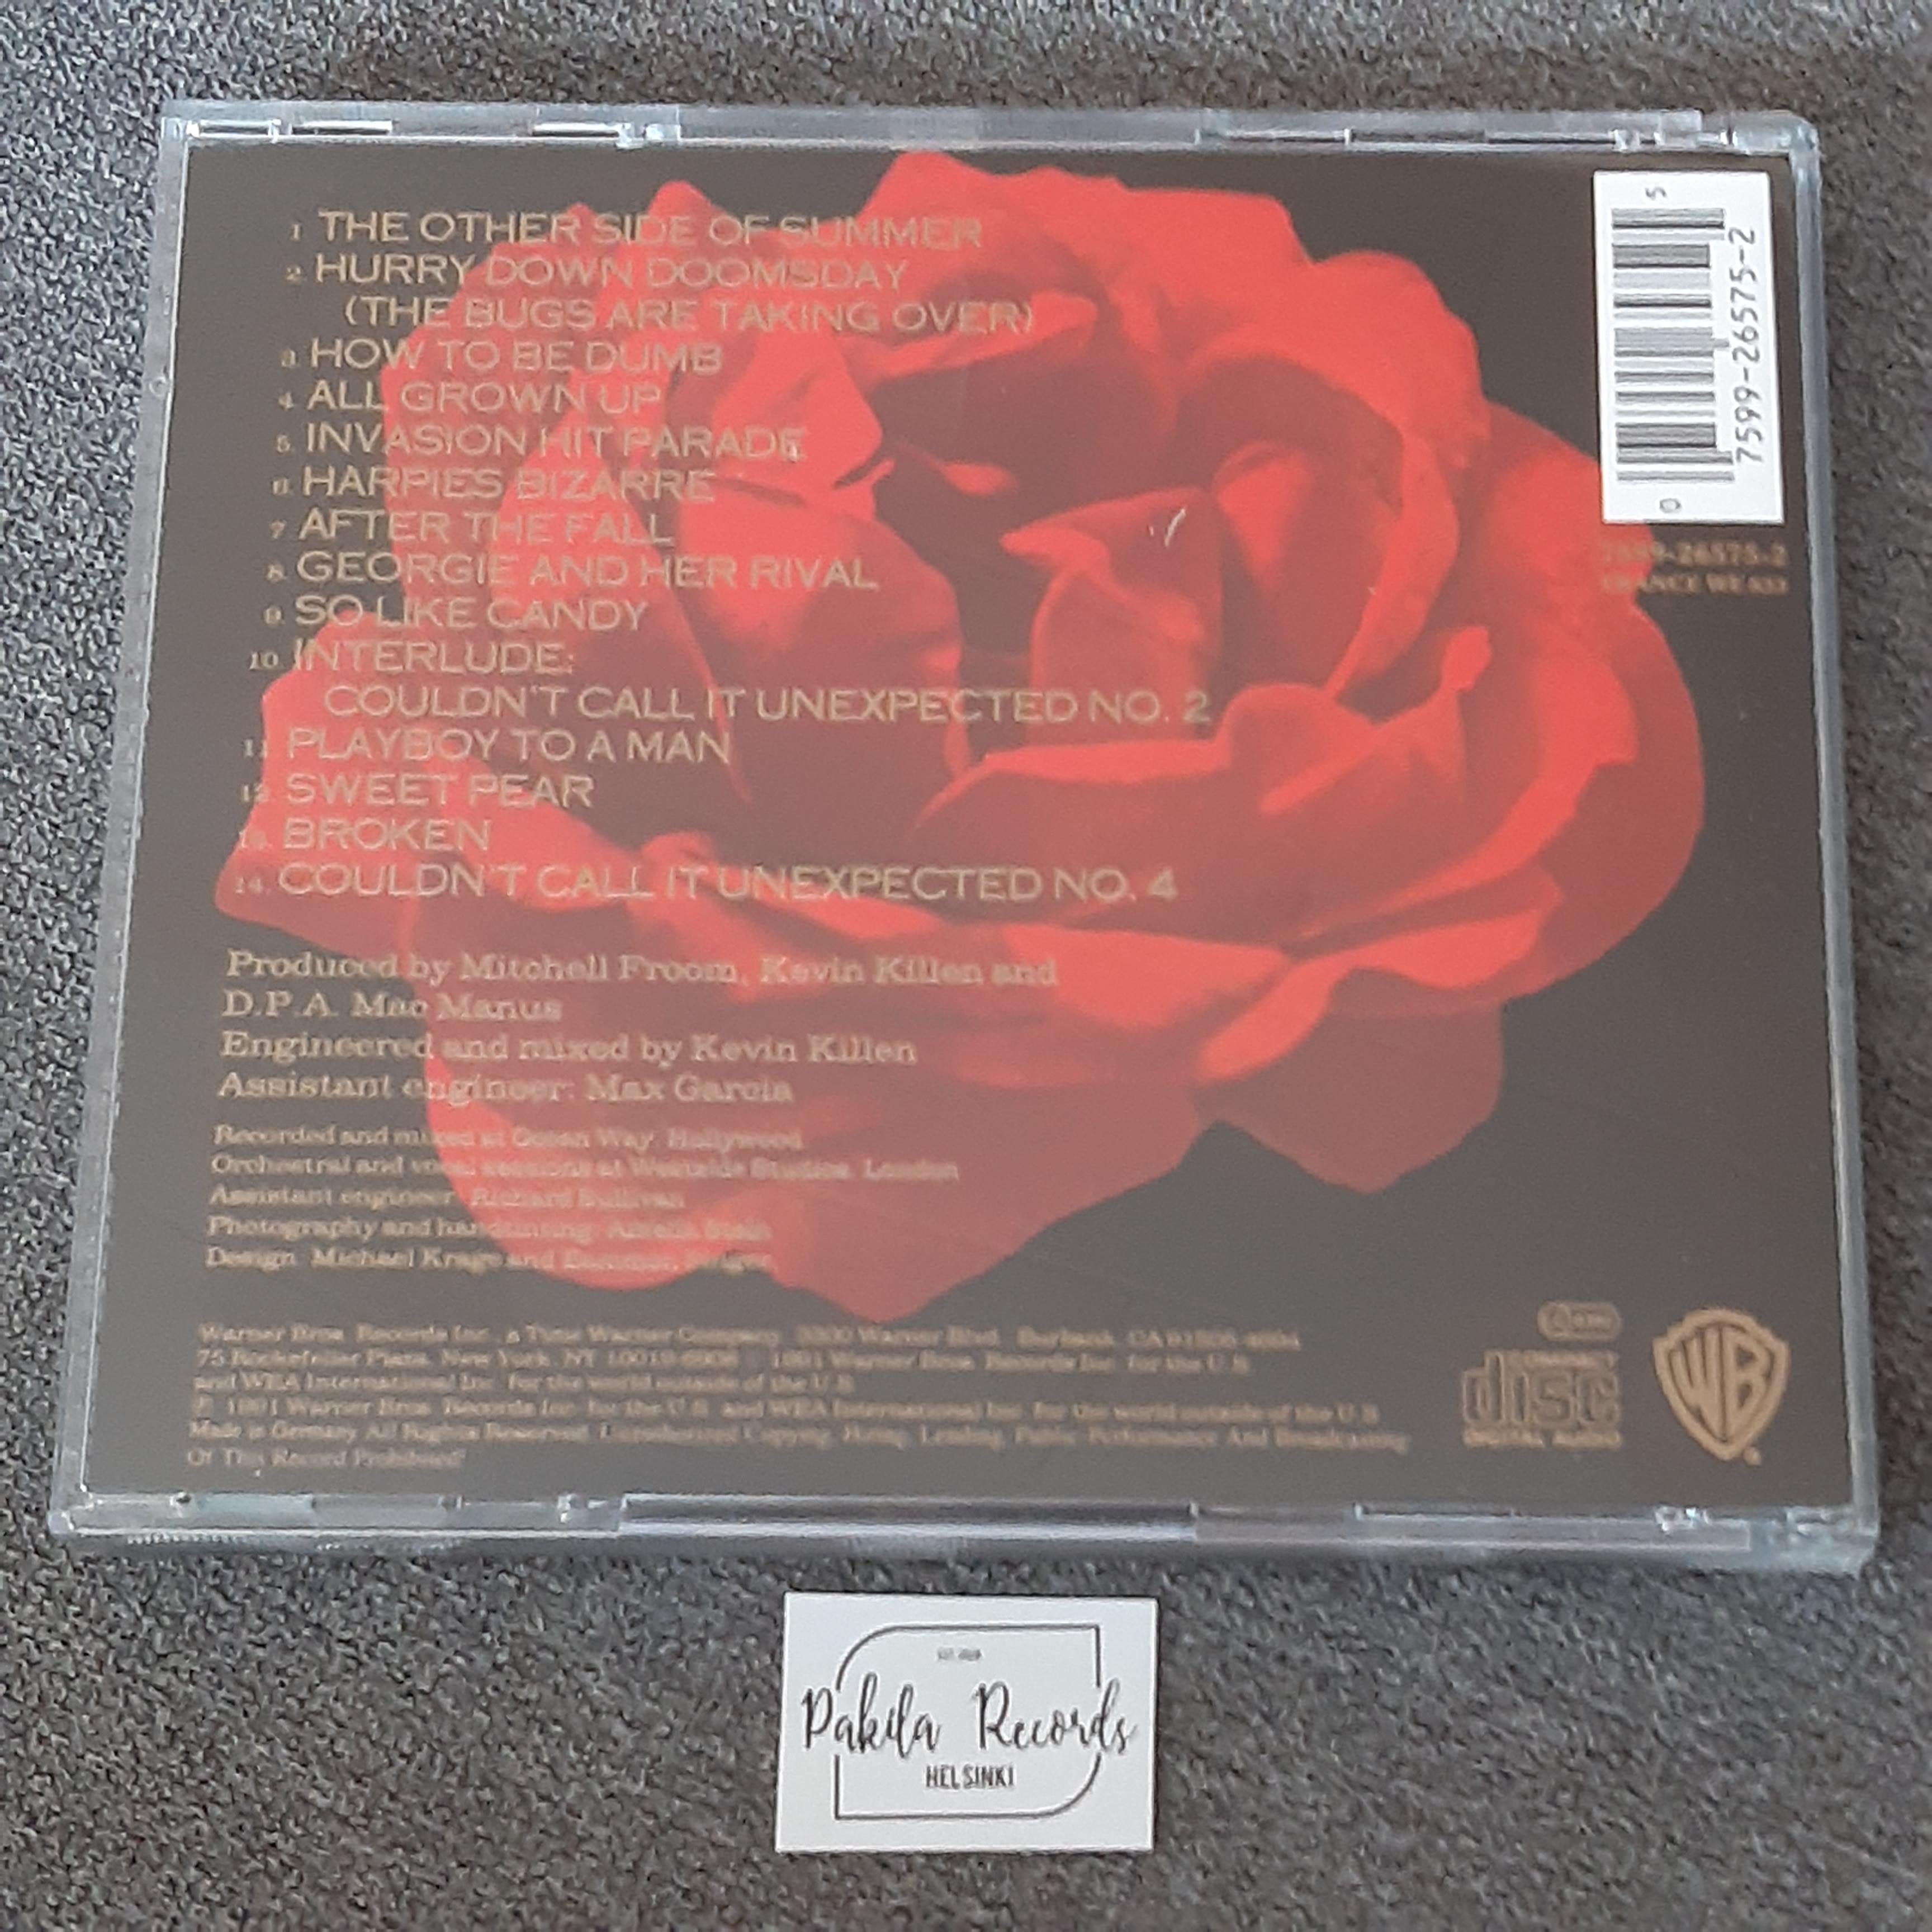 Elvis Costello - Mighty Like A Rose - CD (käytetty)